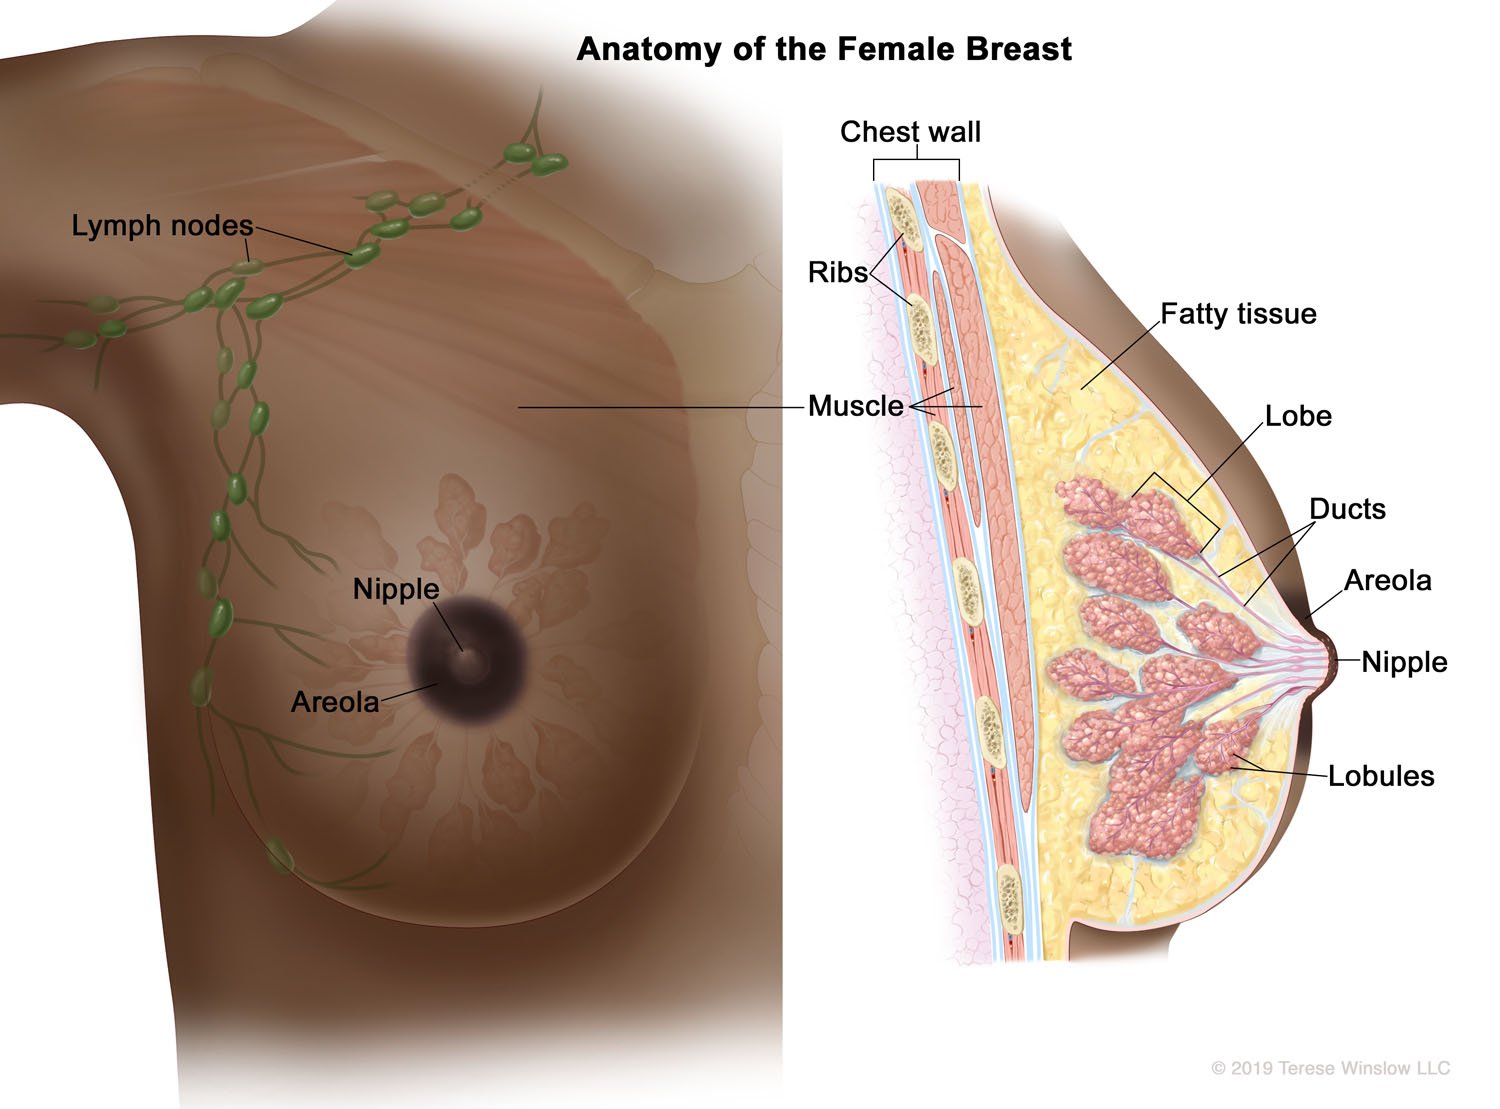 Anatomy of the Female Breast (Brown skin)